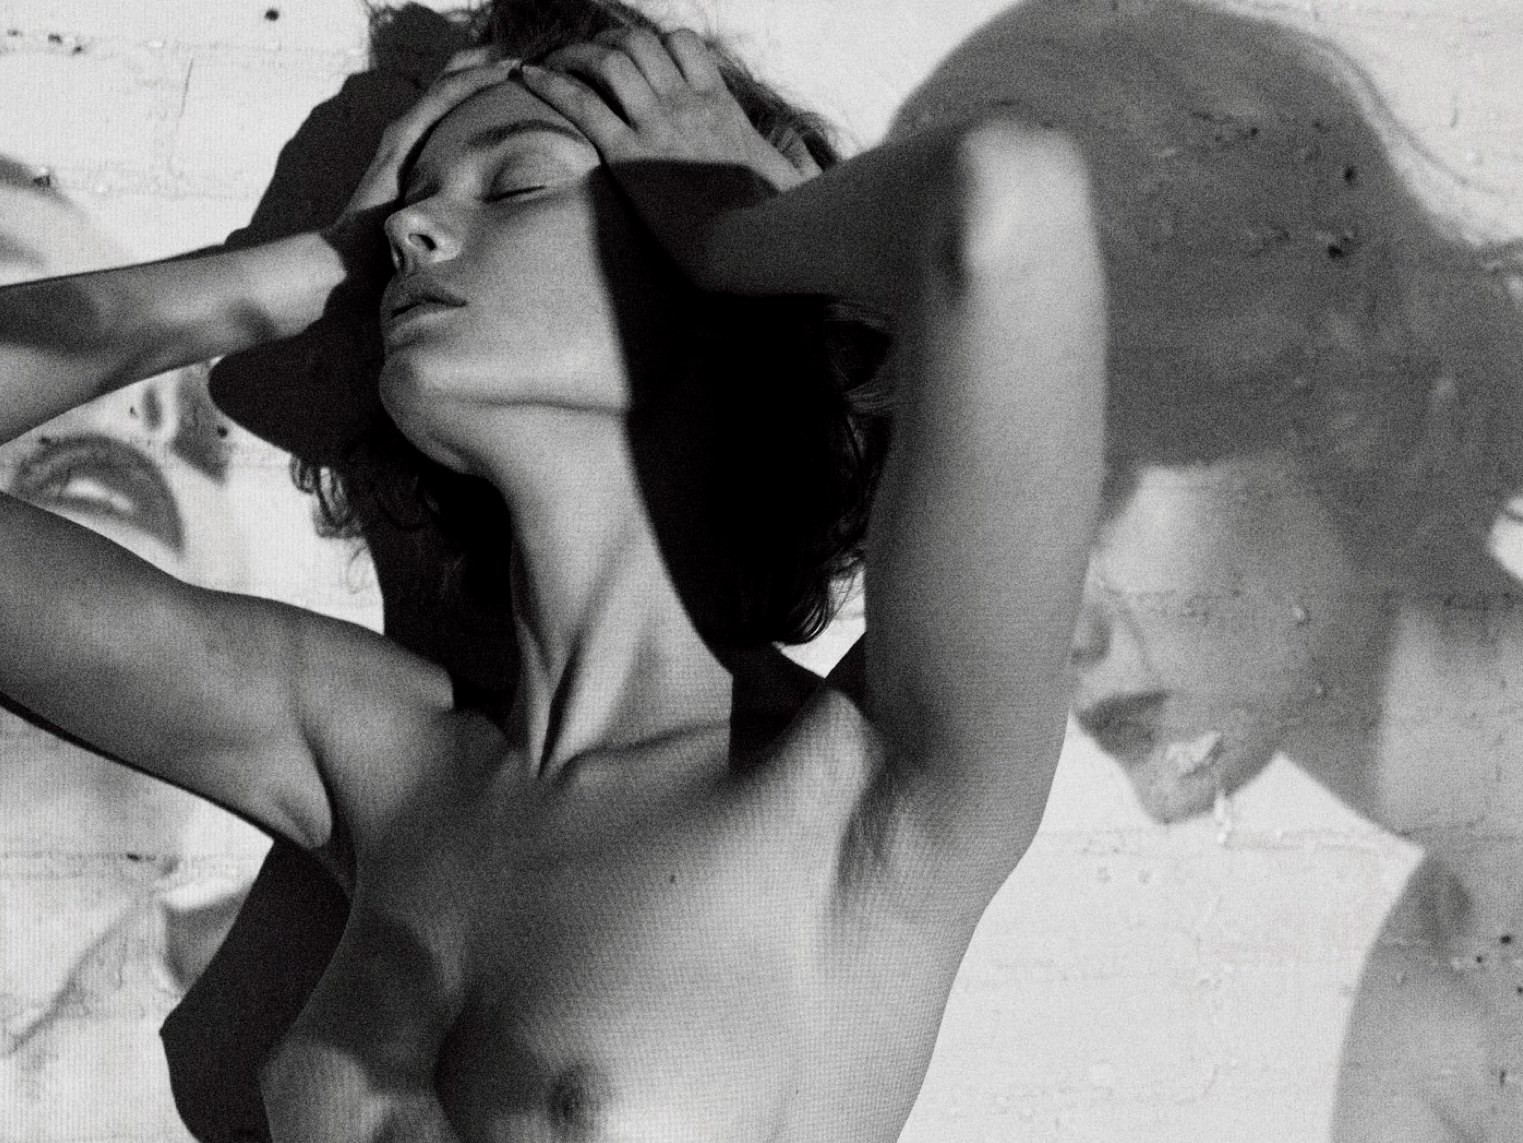 Monika jagaciak totalmente desnuda en una sesión de fotos de johan lindeberg 2015
 #75160673